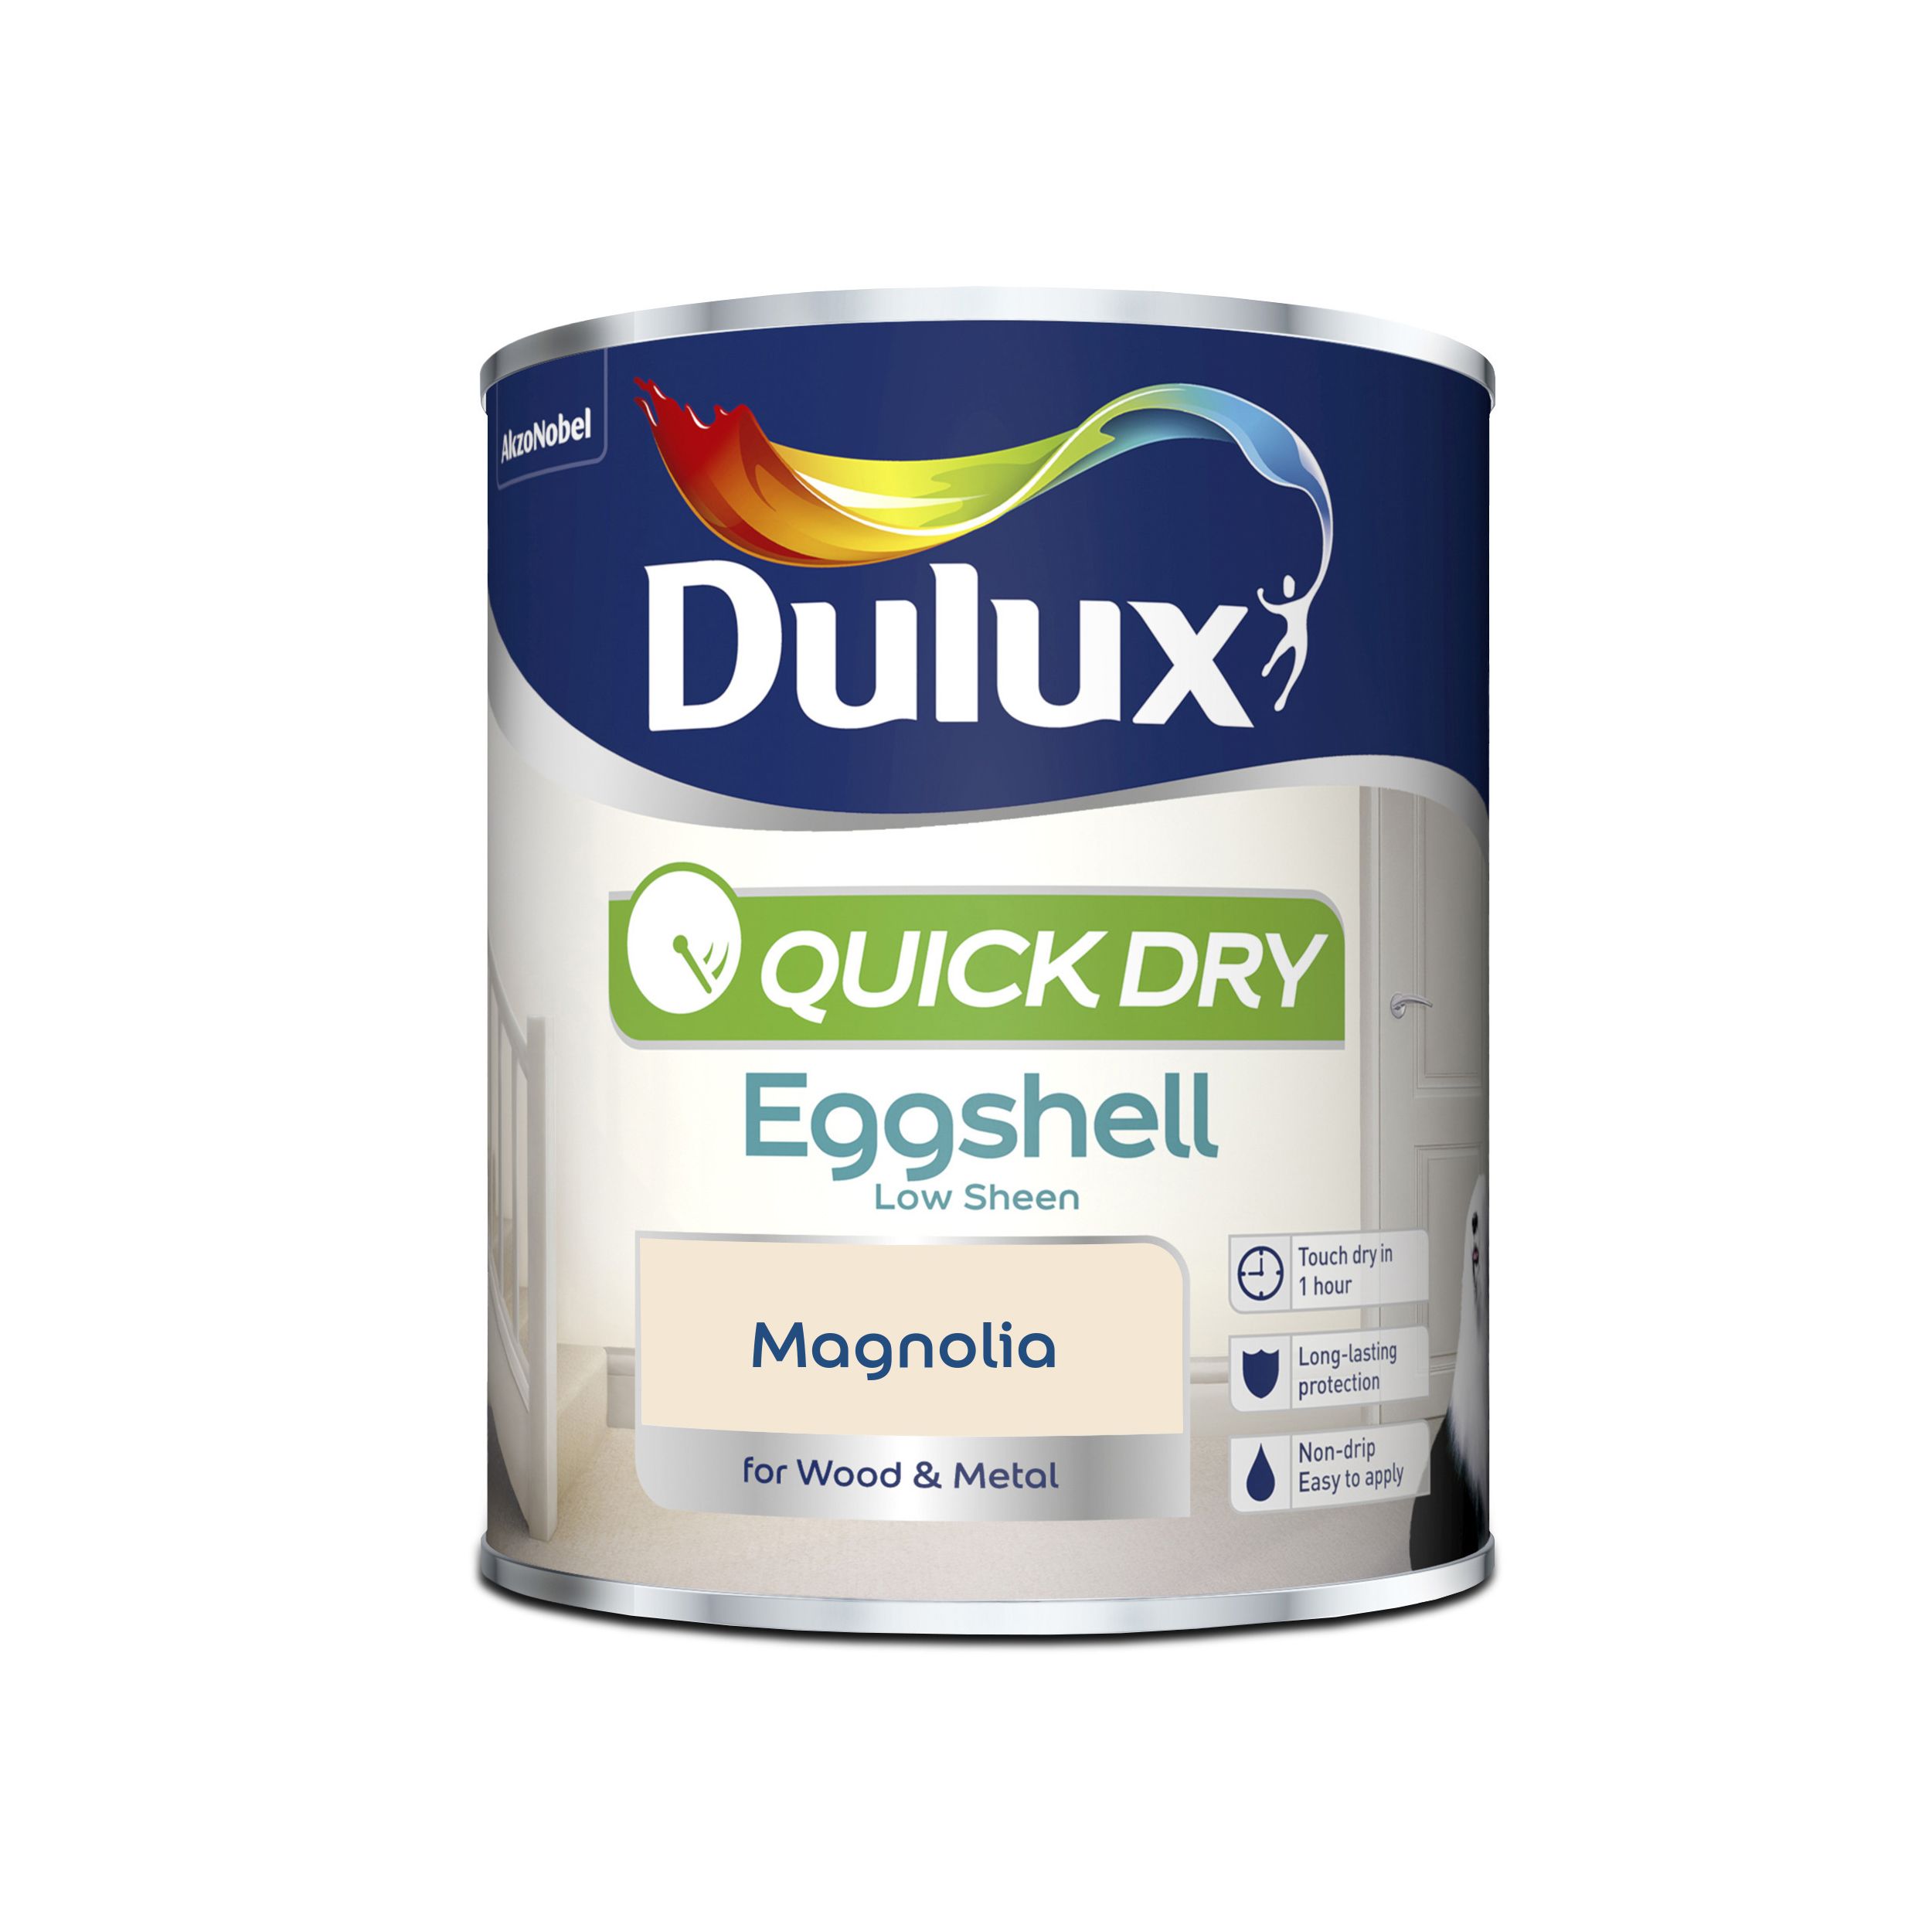 Dulux Quick dry Magnolia Eggshell Metal & wood paint, 750ml